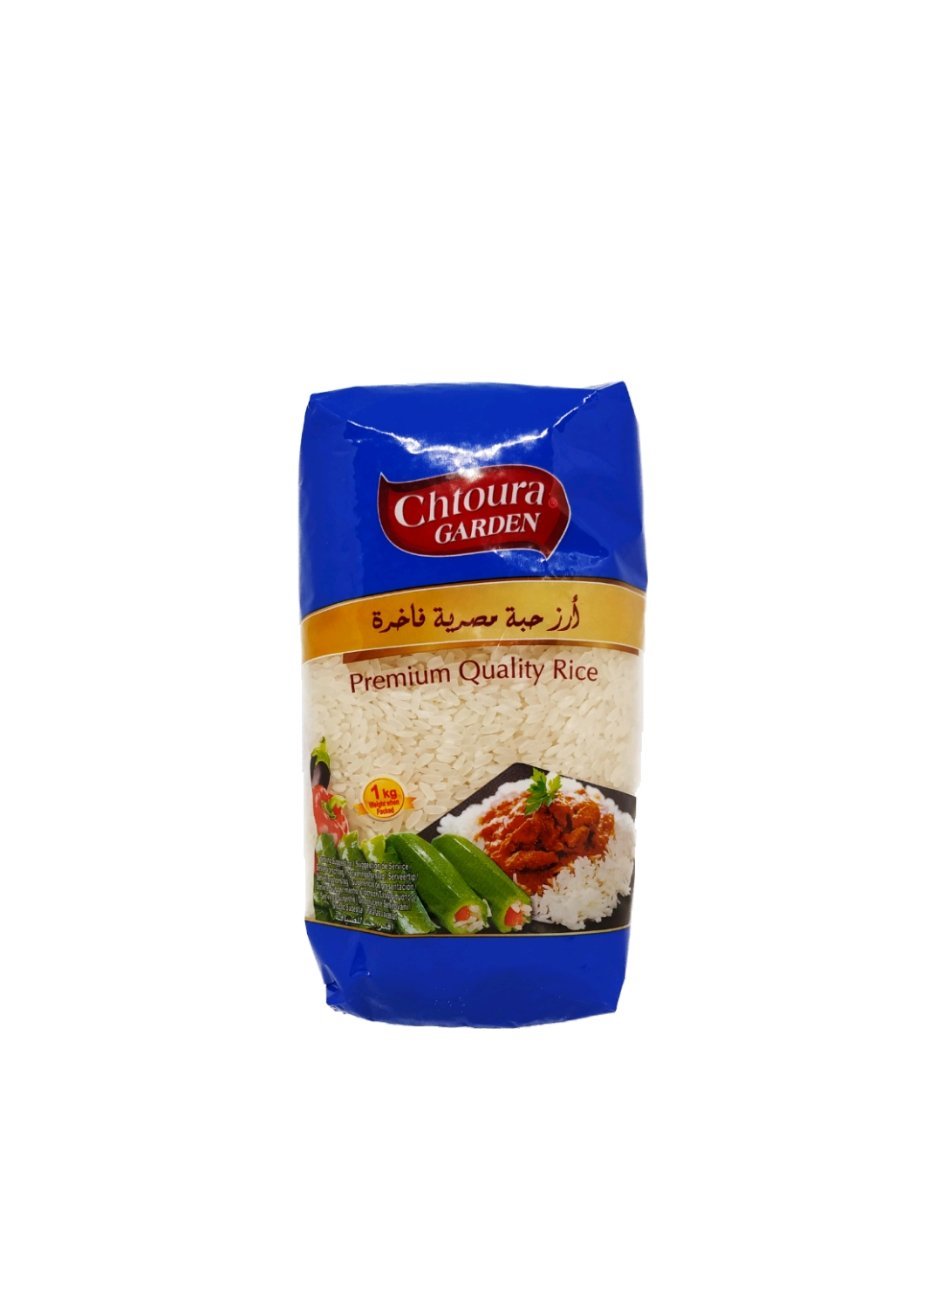 Produits orientaux en ligne : Chtoura garden - Premium quality rice